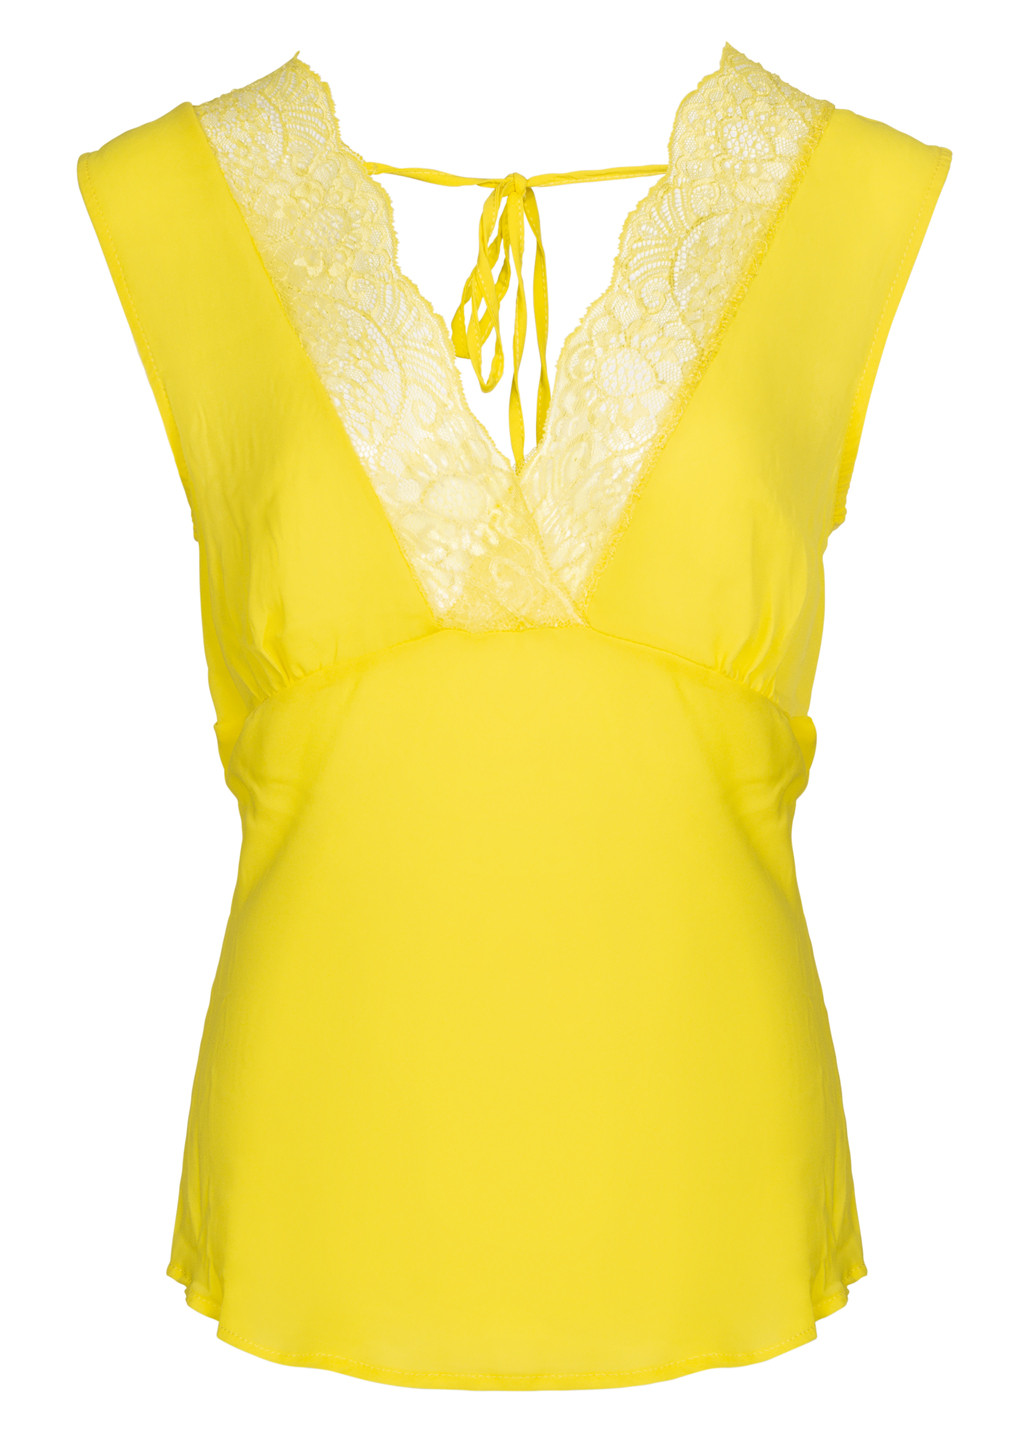 Жёлтая женская желтая блузка без рукавов Rinascimento